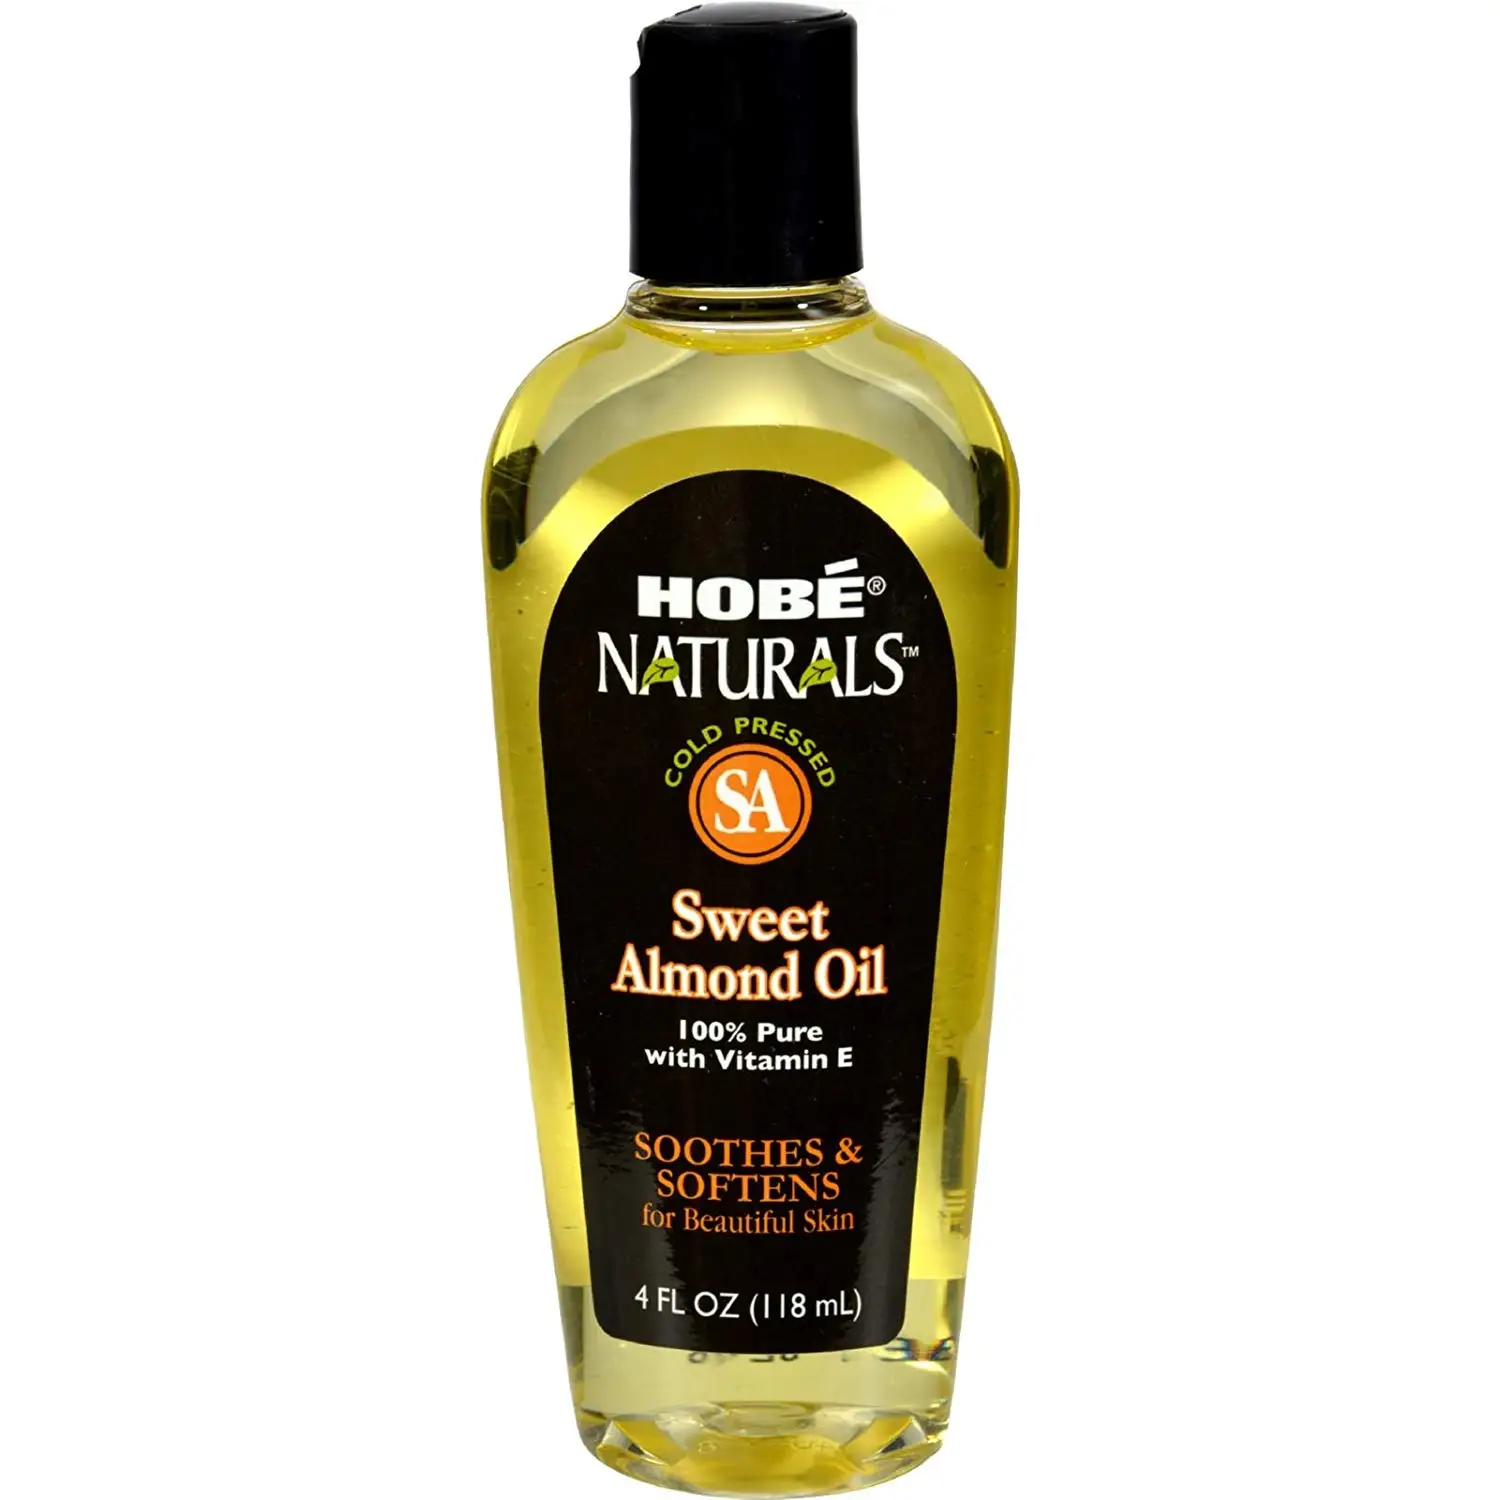 Sweet natural. Sweet Almond Oil. Original Hobe. Hobe.